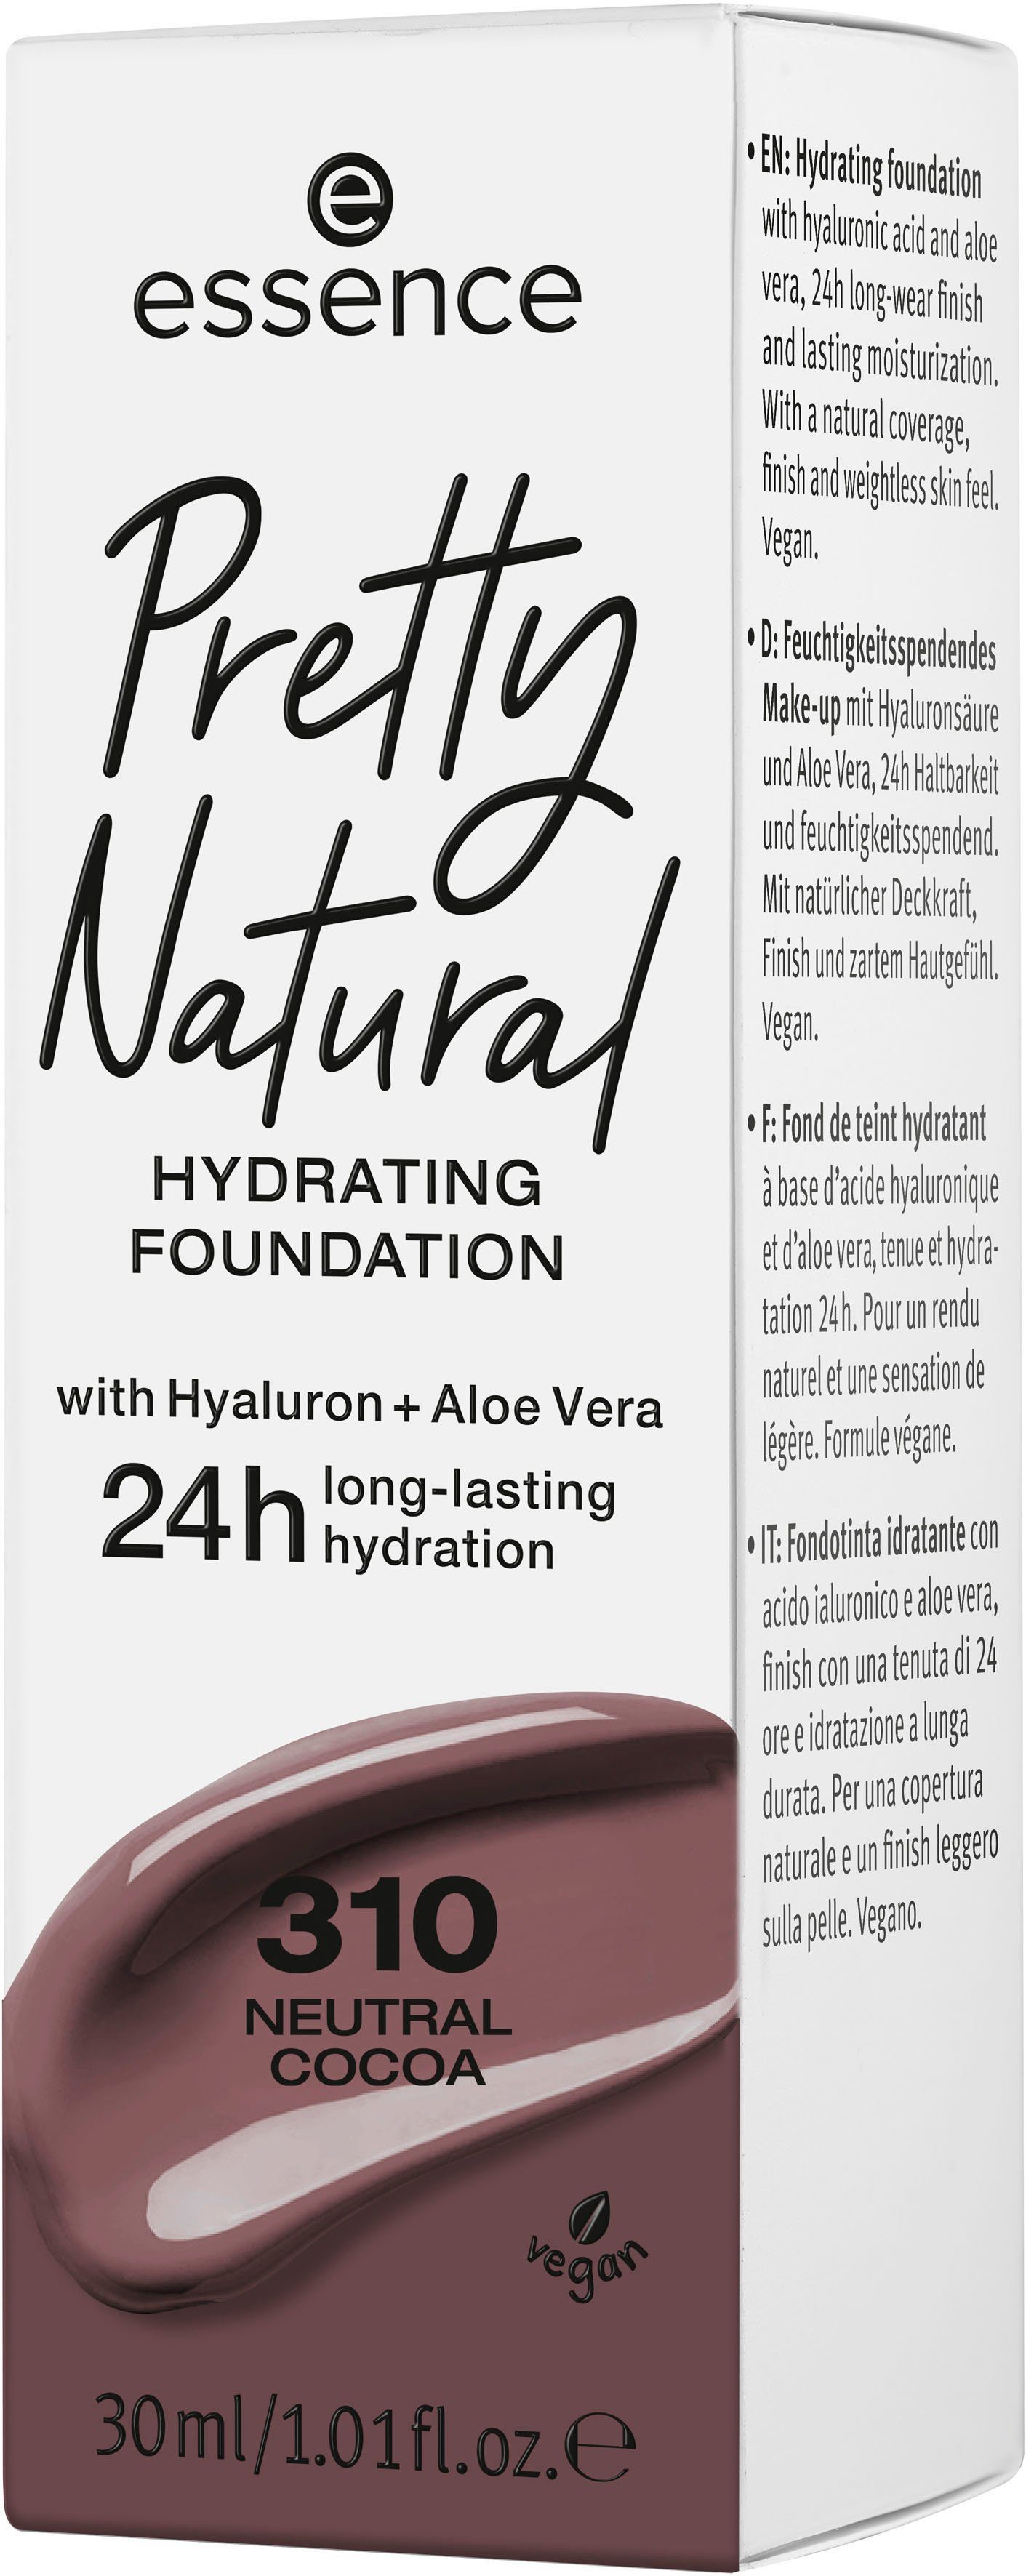 Essence Foundation Neutral Pretty HYDRATING, Natural 3-tlg. Cocoa